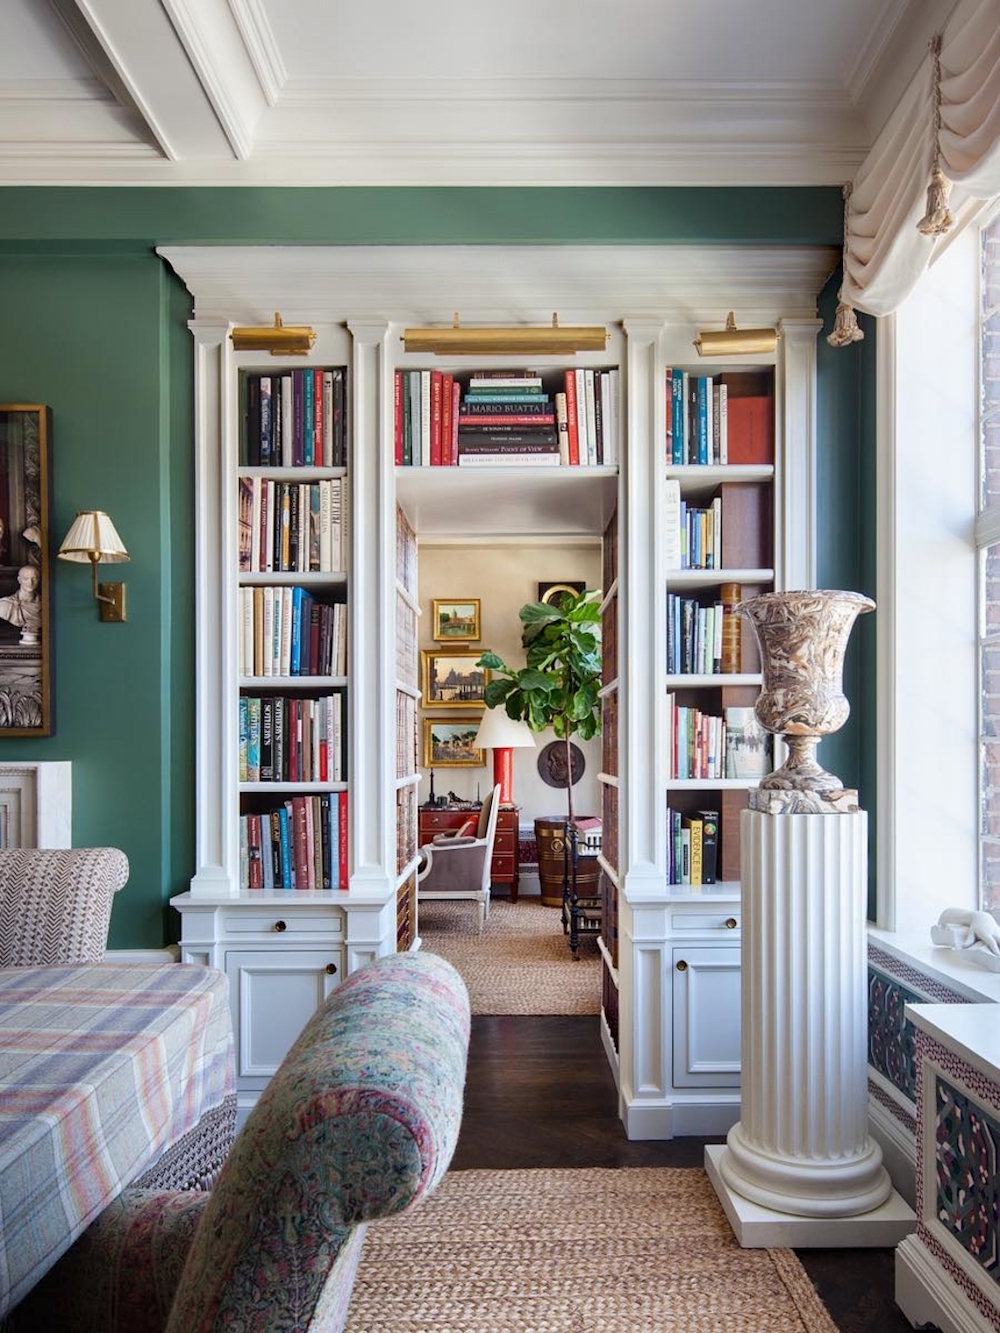 120+ of My Favorite Interior Design Books + Gardens! - Laurel Home